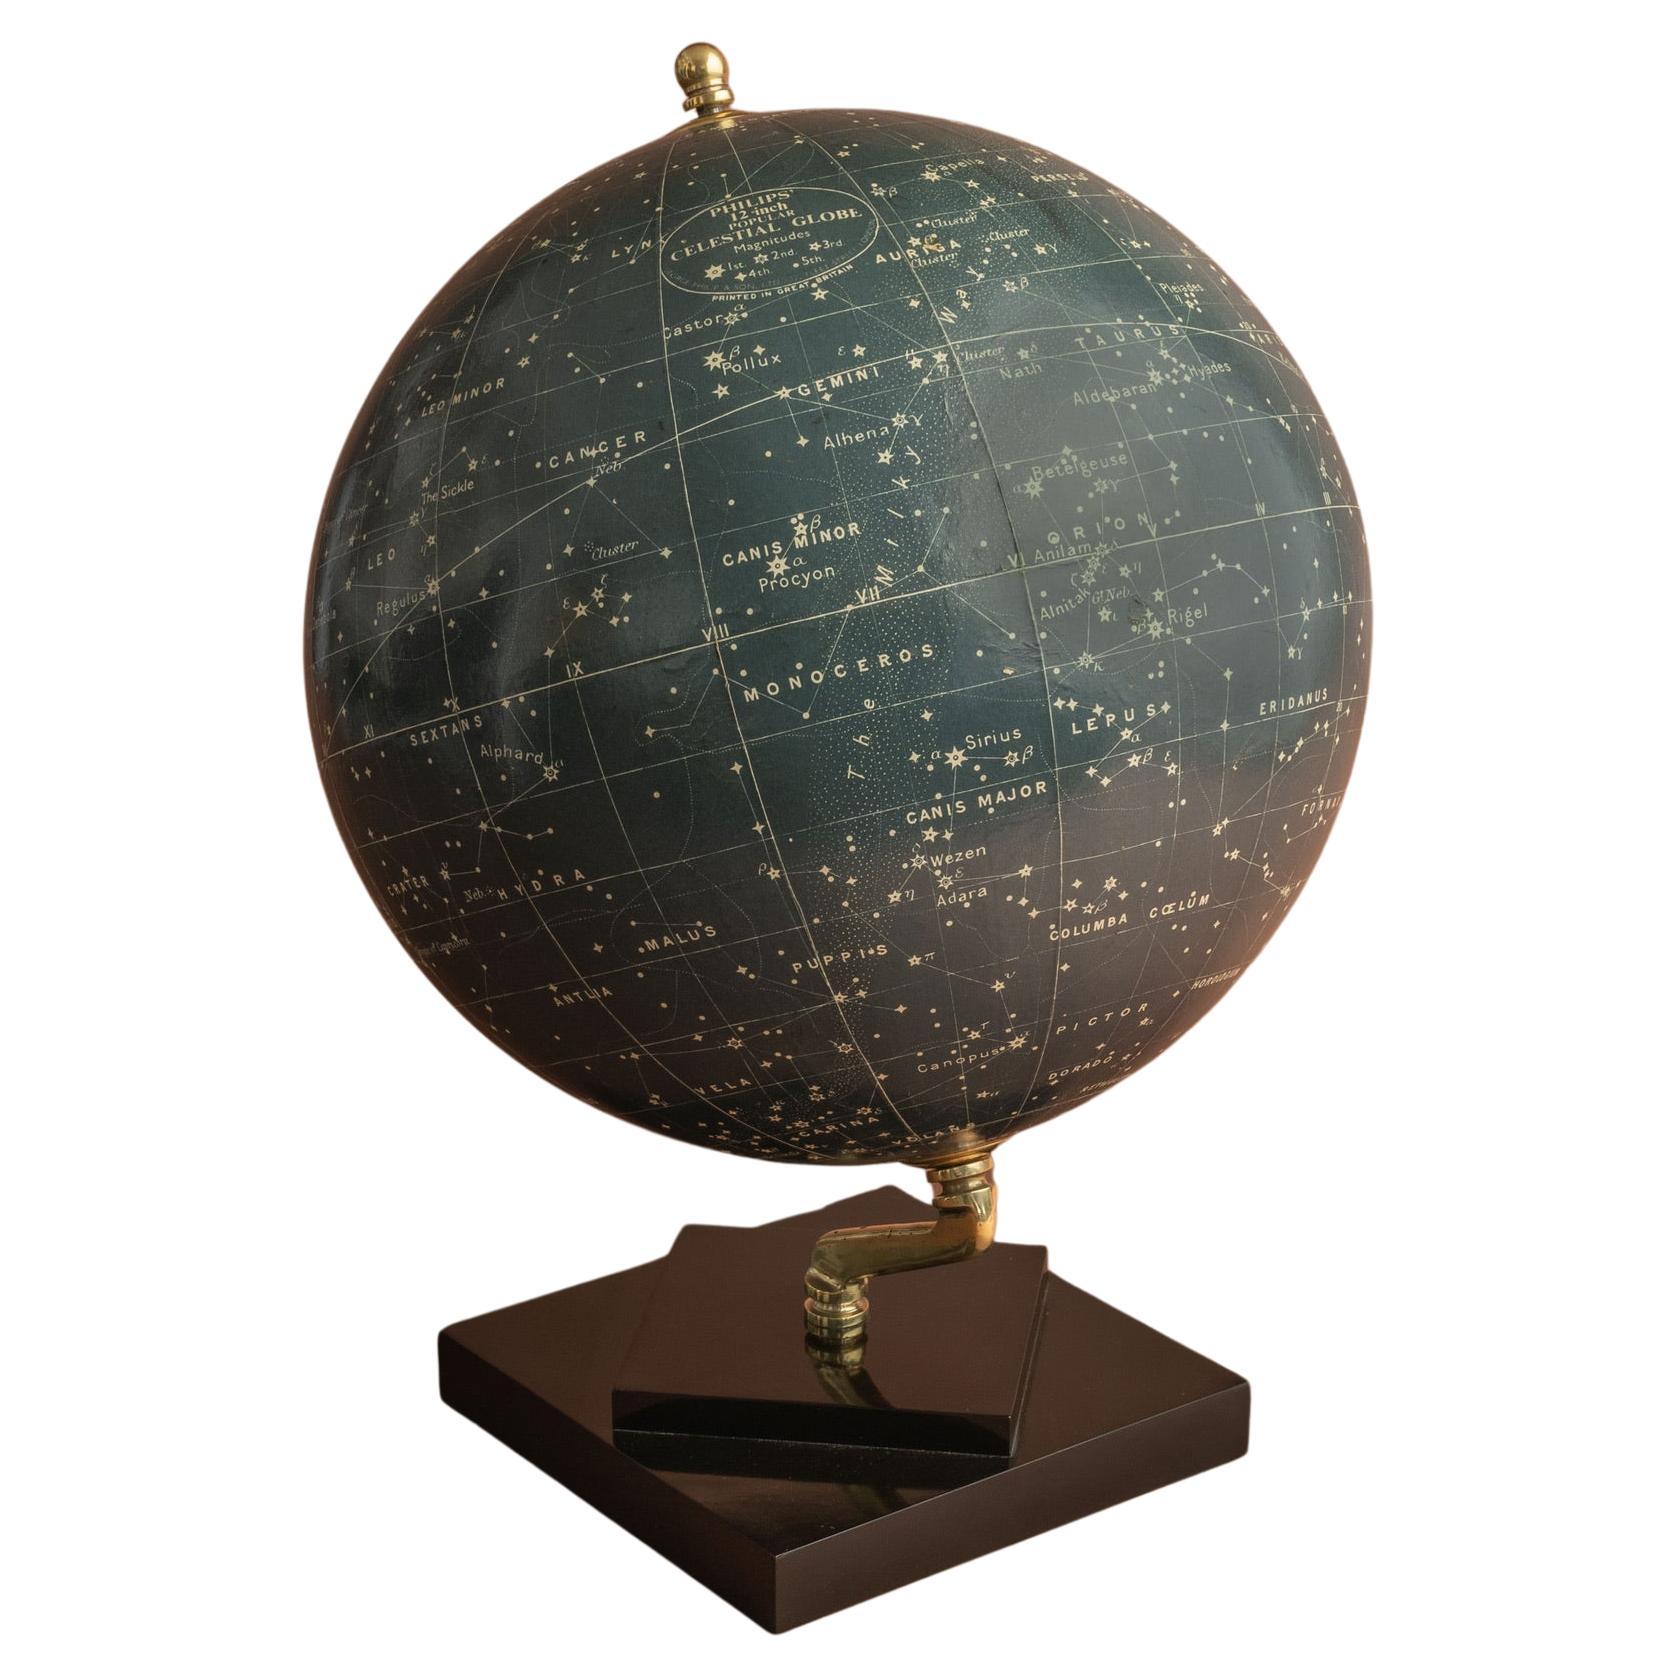 Philips' Celestial Globe, circa 1935